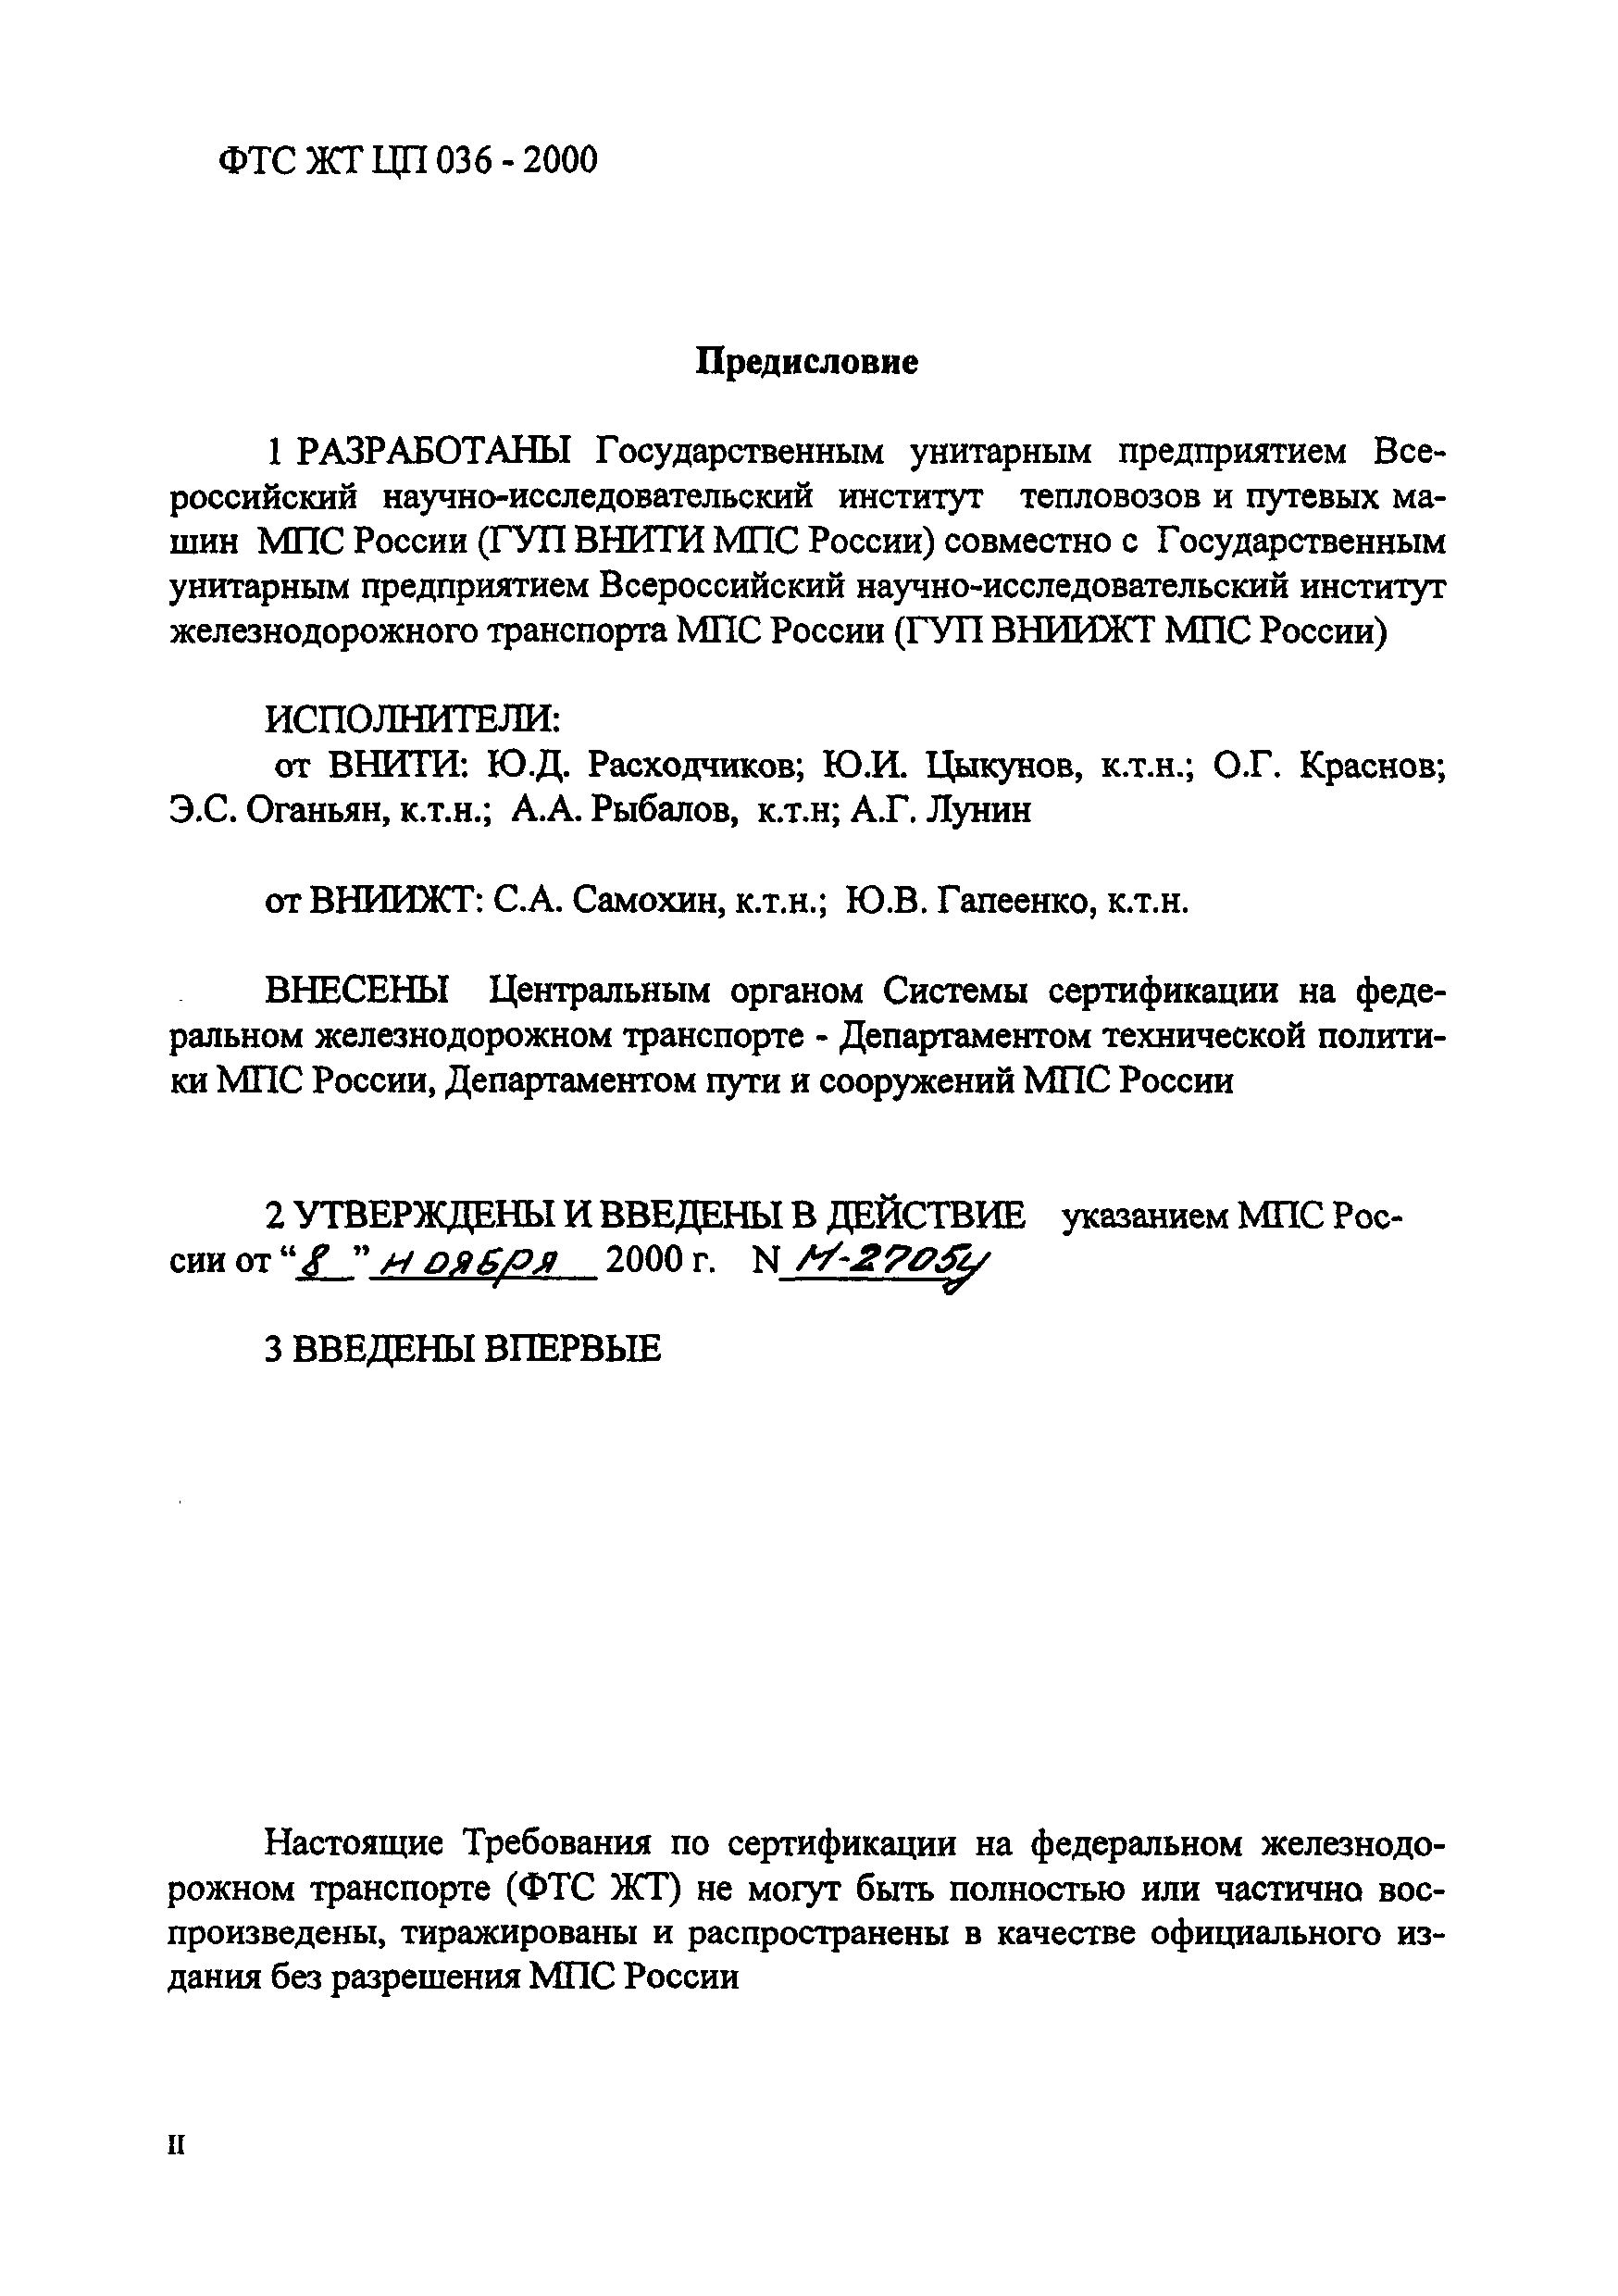 ФТС ЖТ ЦП 036-2000